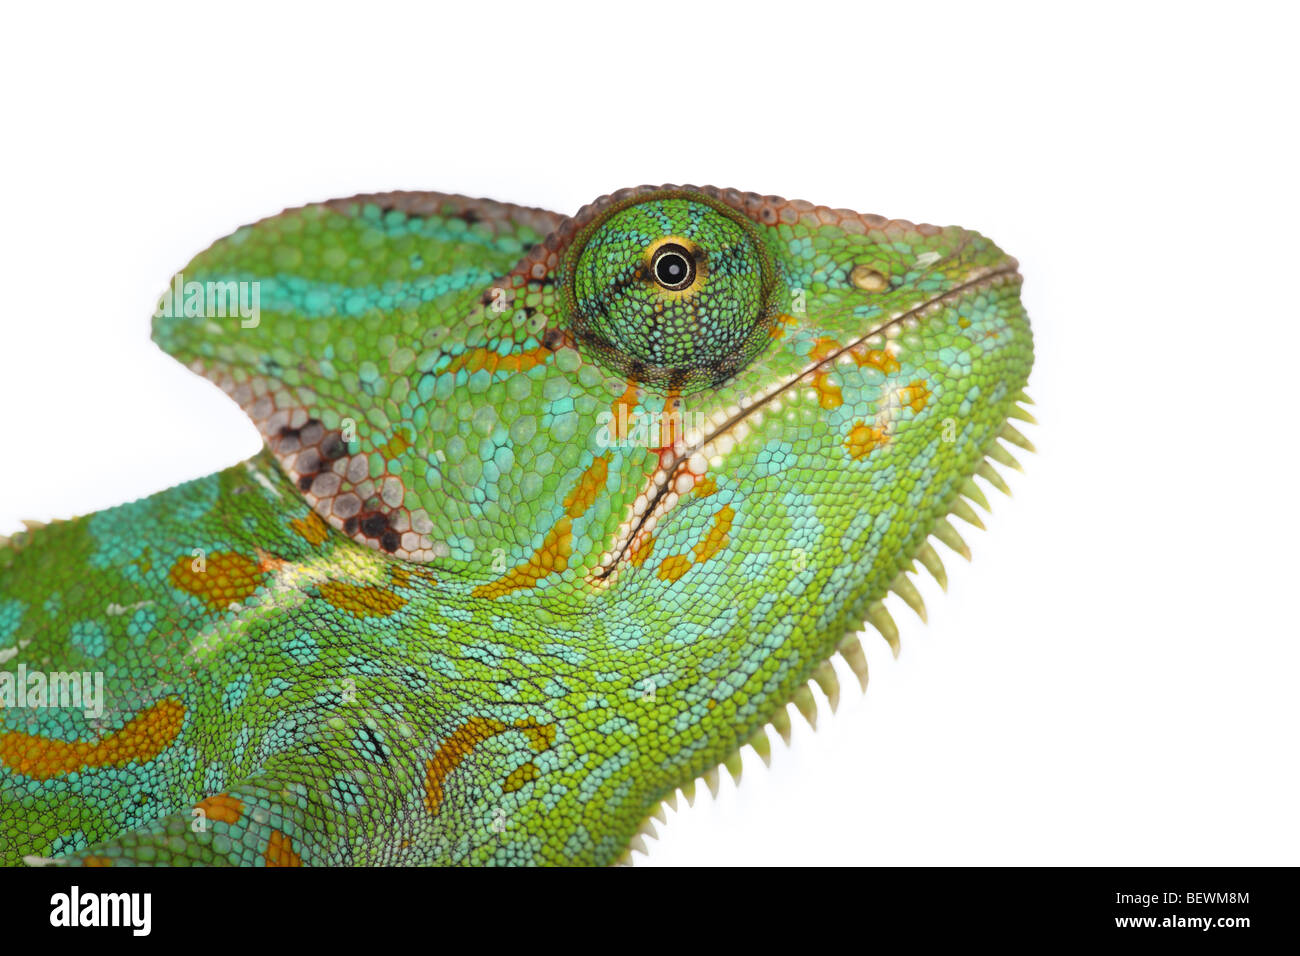 Studio photograph of a Yemen or Veiled Chameleon Stock Photo